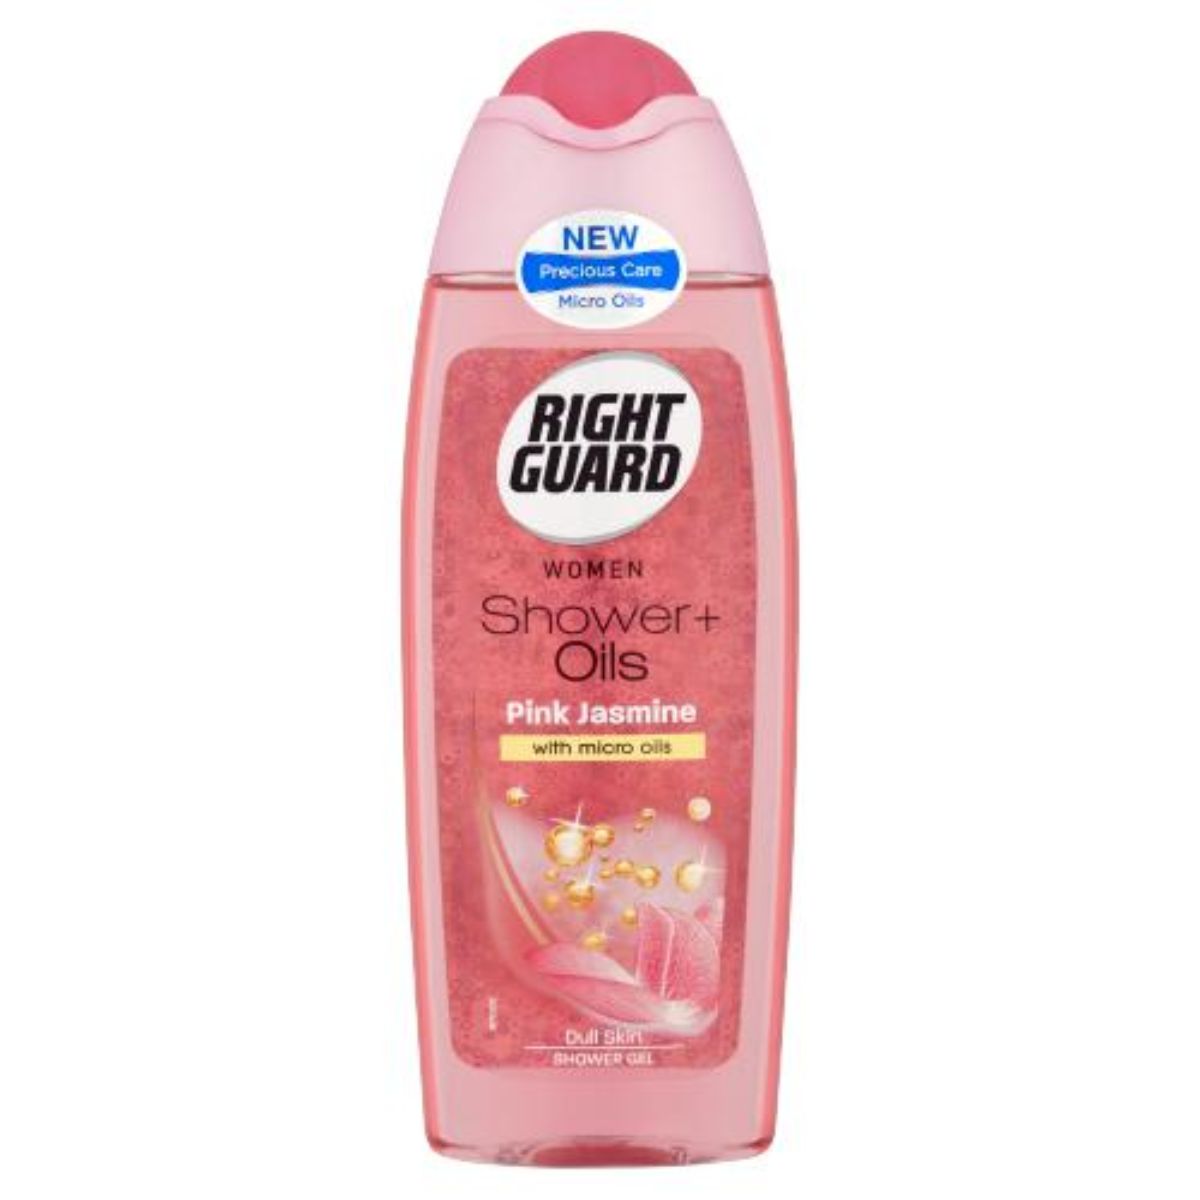 Right Guard - Women Shower Oils Pink Jasmine Dull Skin Shower Gel - 250ml.